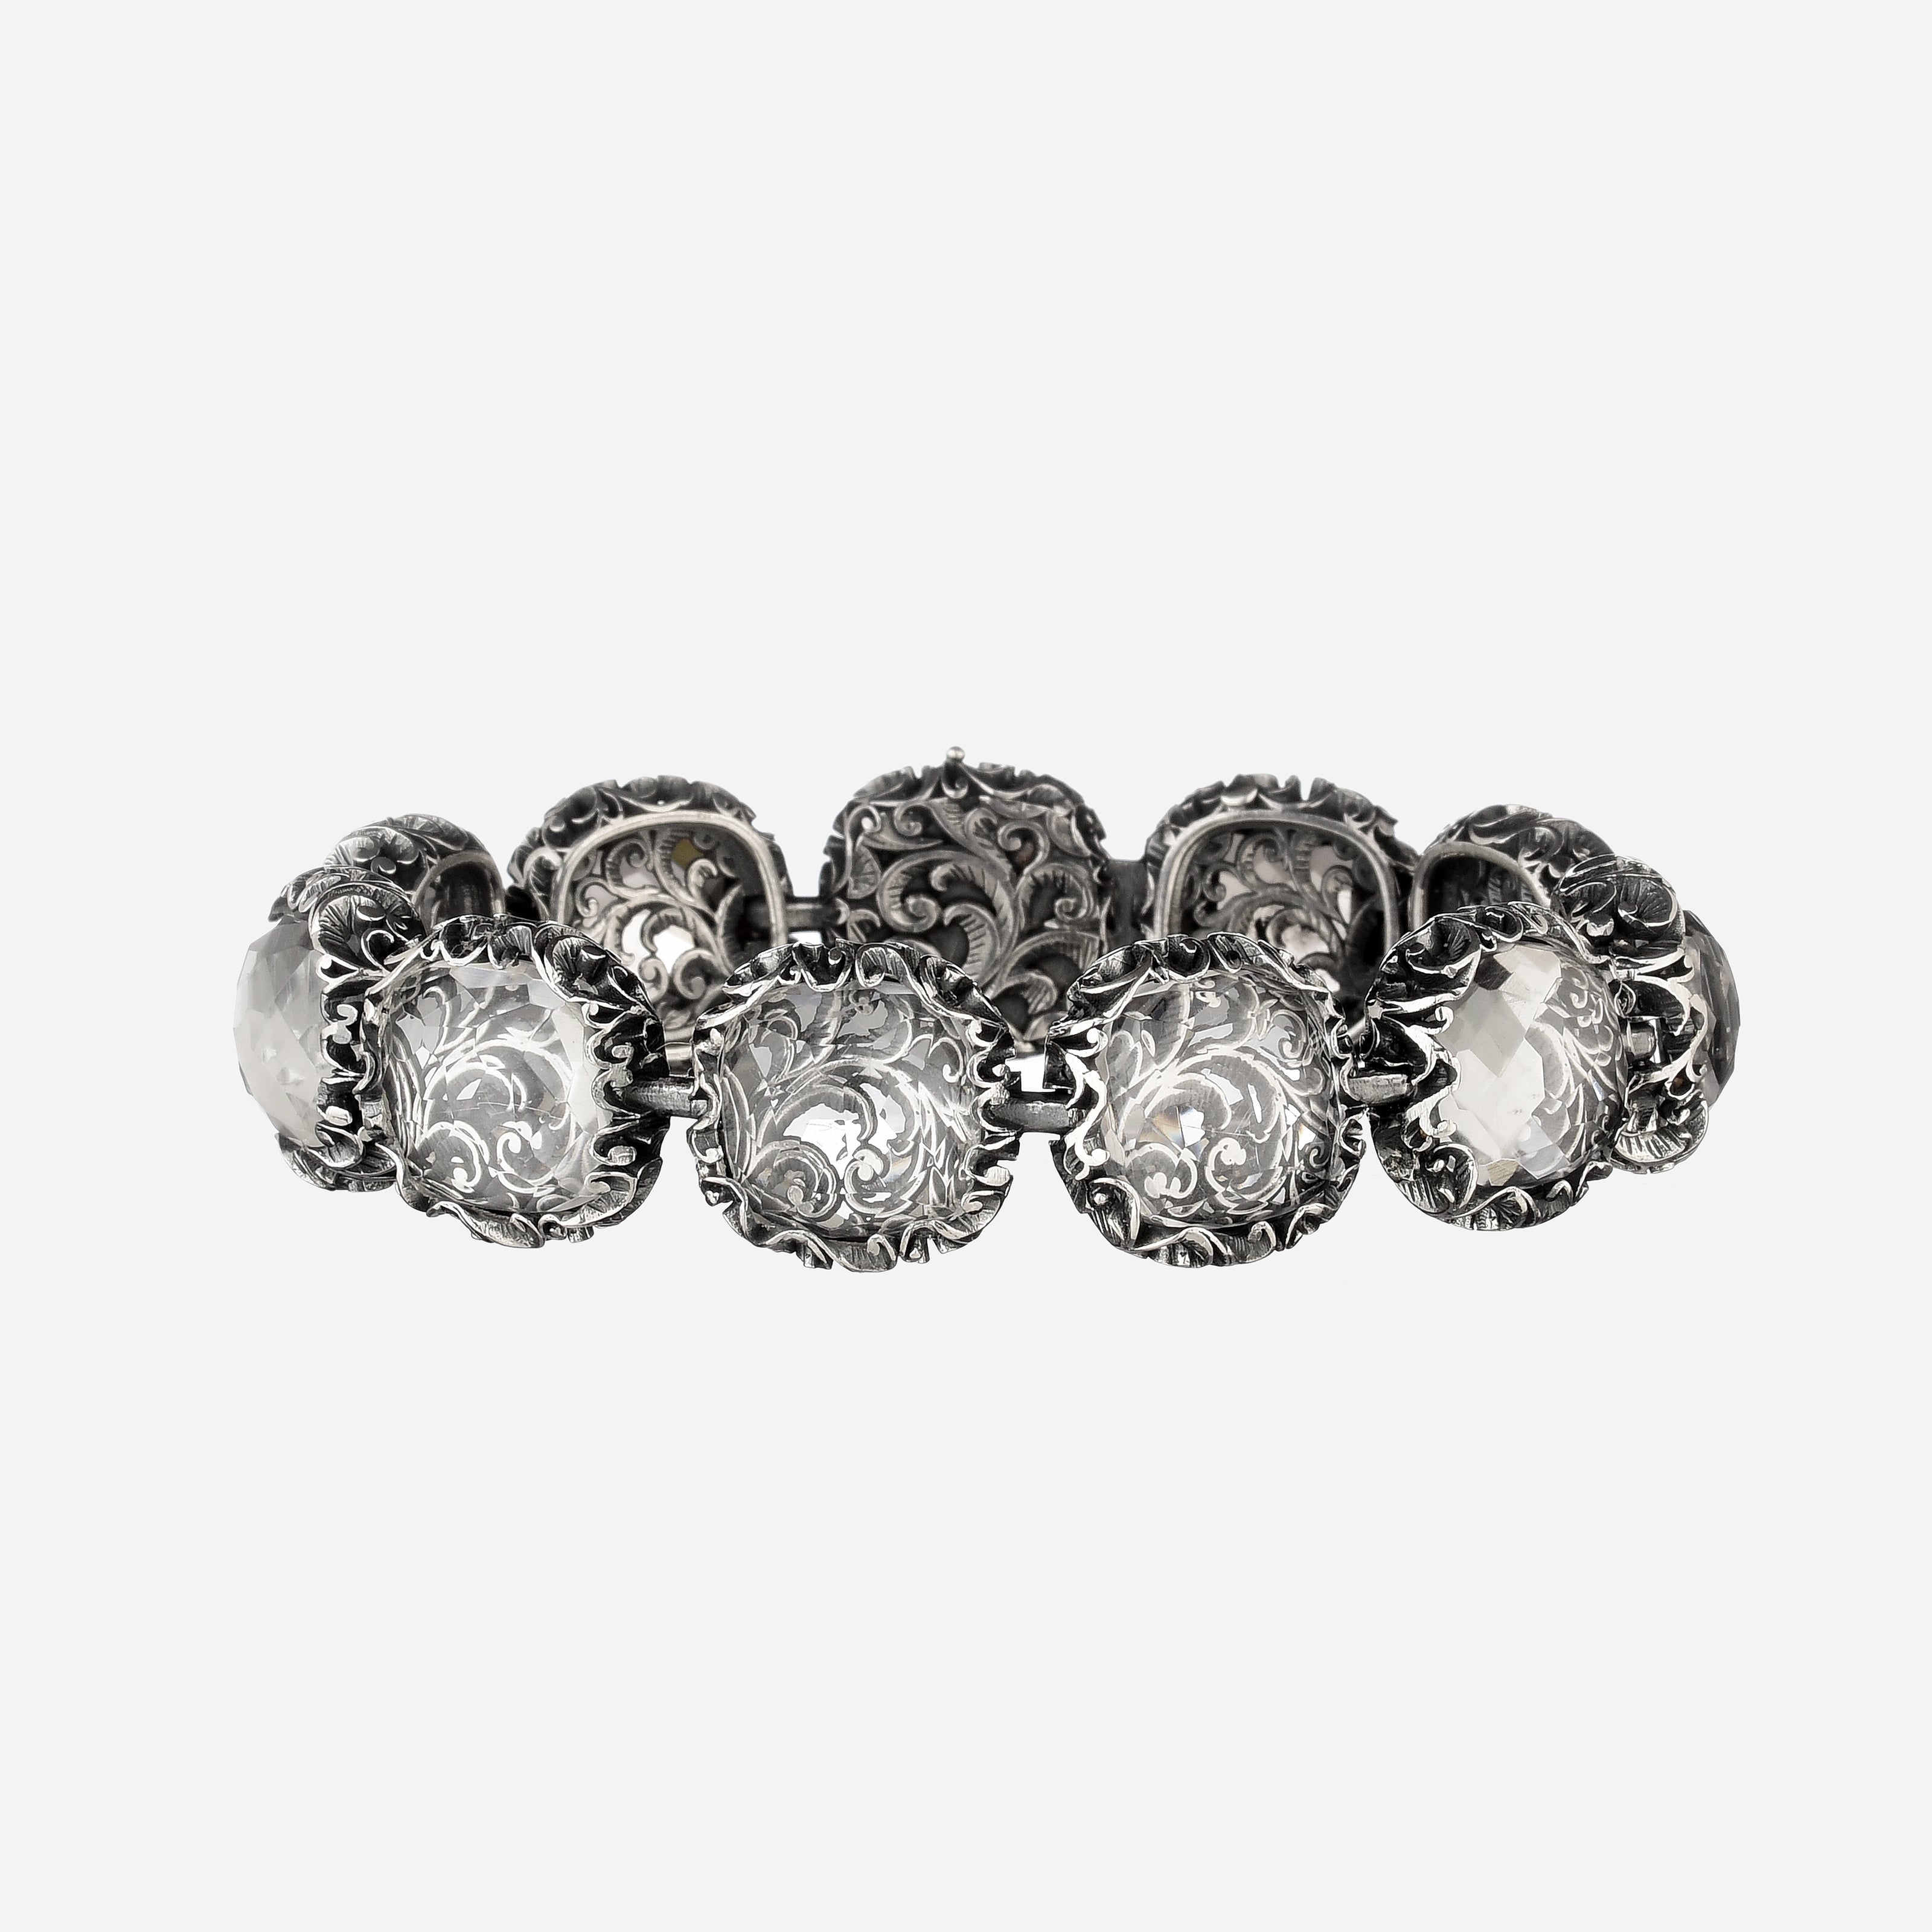 Moonlight bracelet with 10 cabochon stones